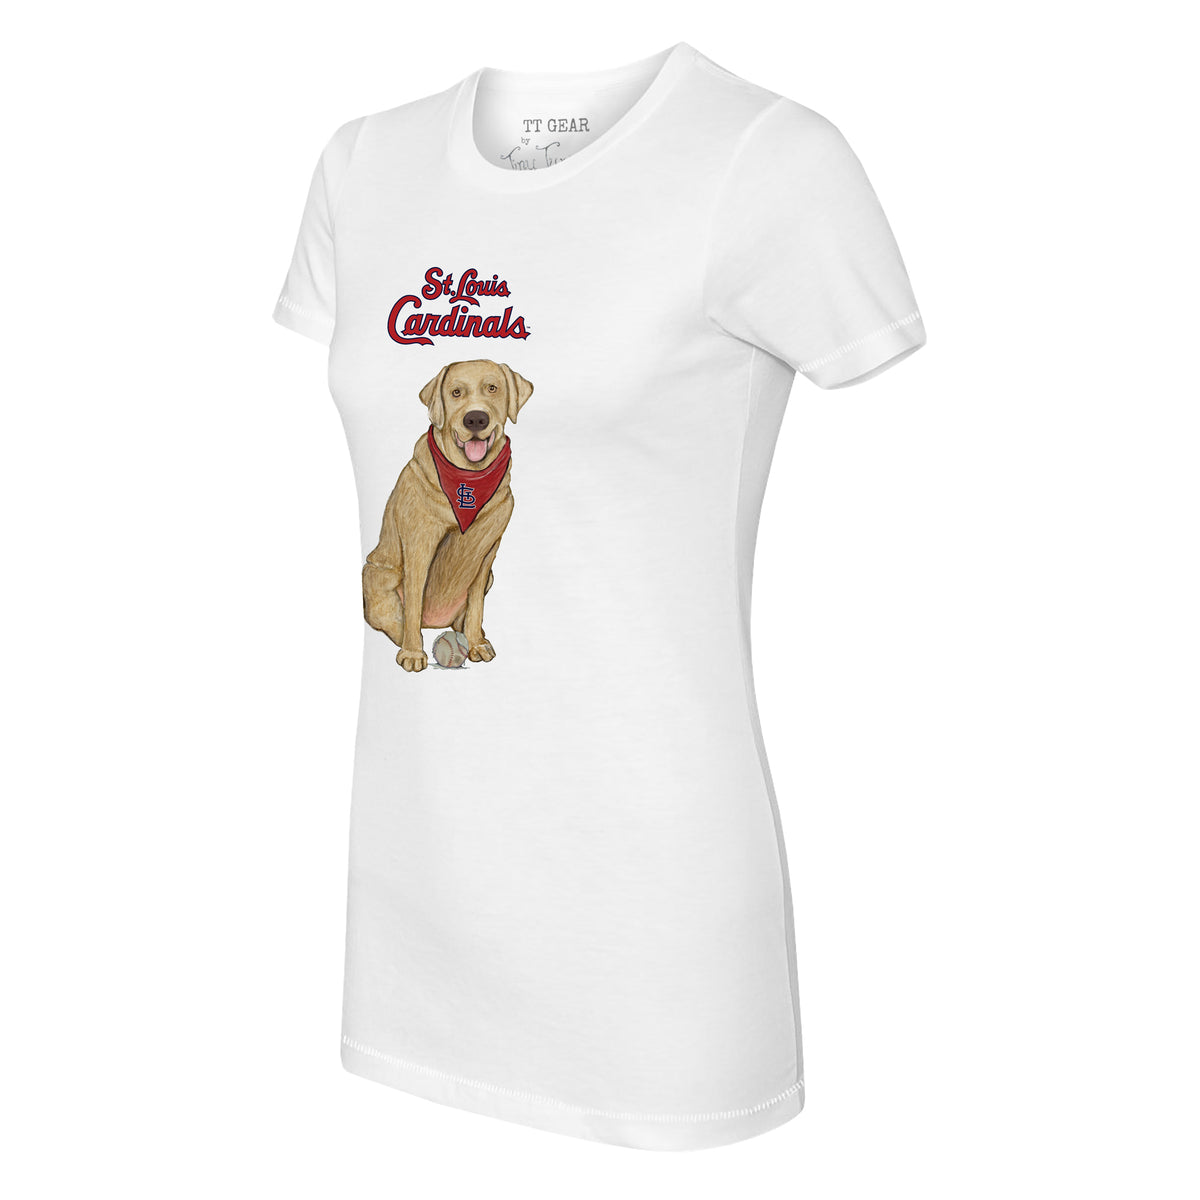 St. Louis Cardinals Yellow Labrador Retriever Tee Shirt